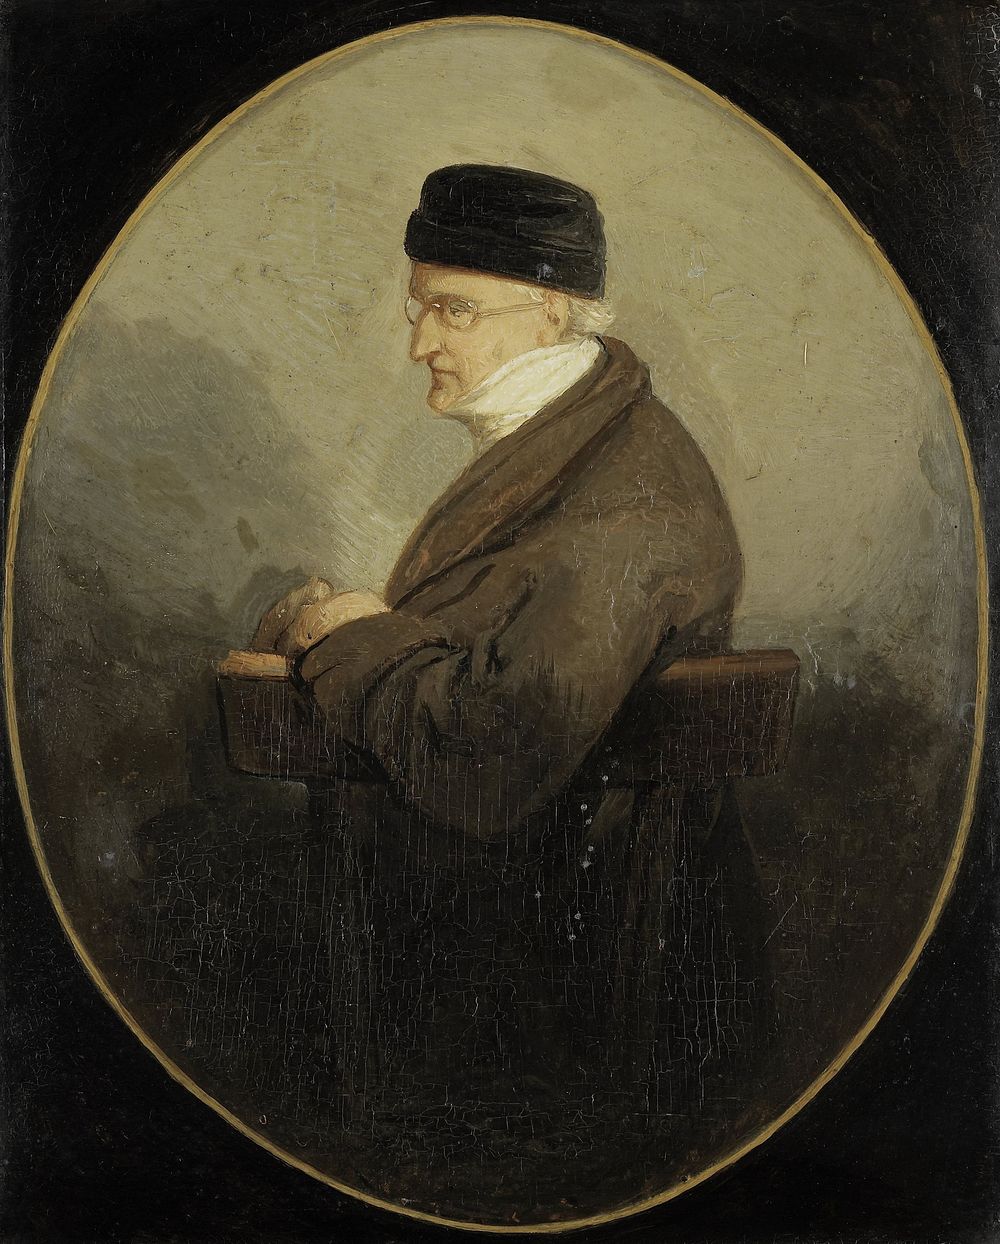 David Pierre Giottino Humbert de Superville (1770-1849), Painter and Writer (c. 1840 - c. 1849) by Jacobus Ludovicus Cornet